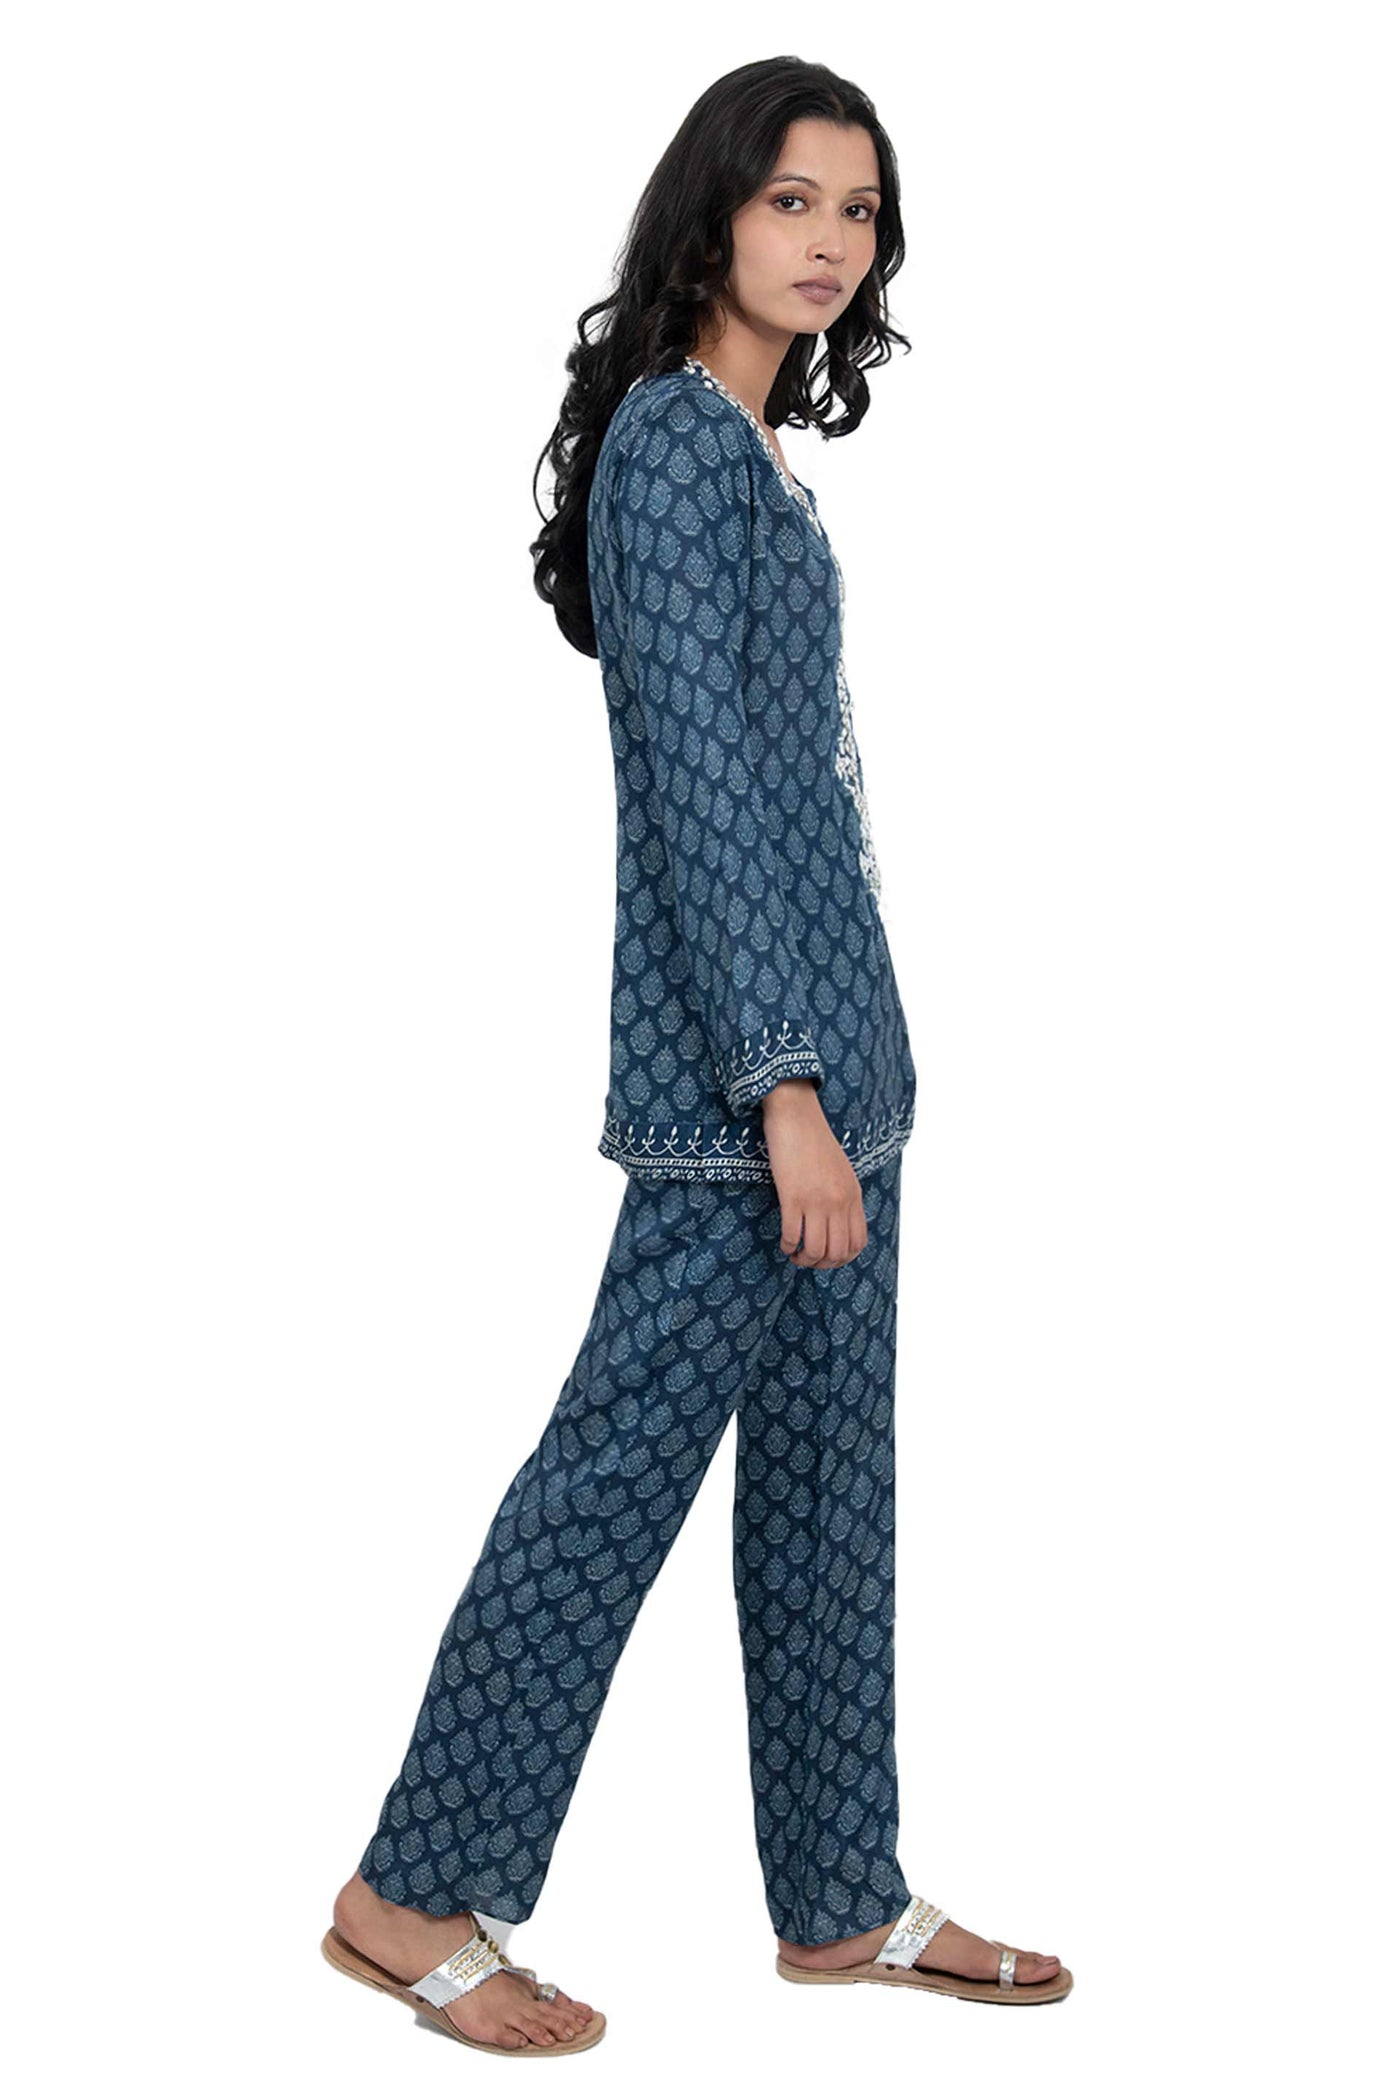 Monisha Jaising Mirrior Set navy blue online shopping melange singapore indian designer wear